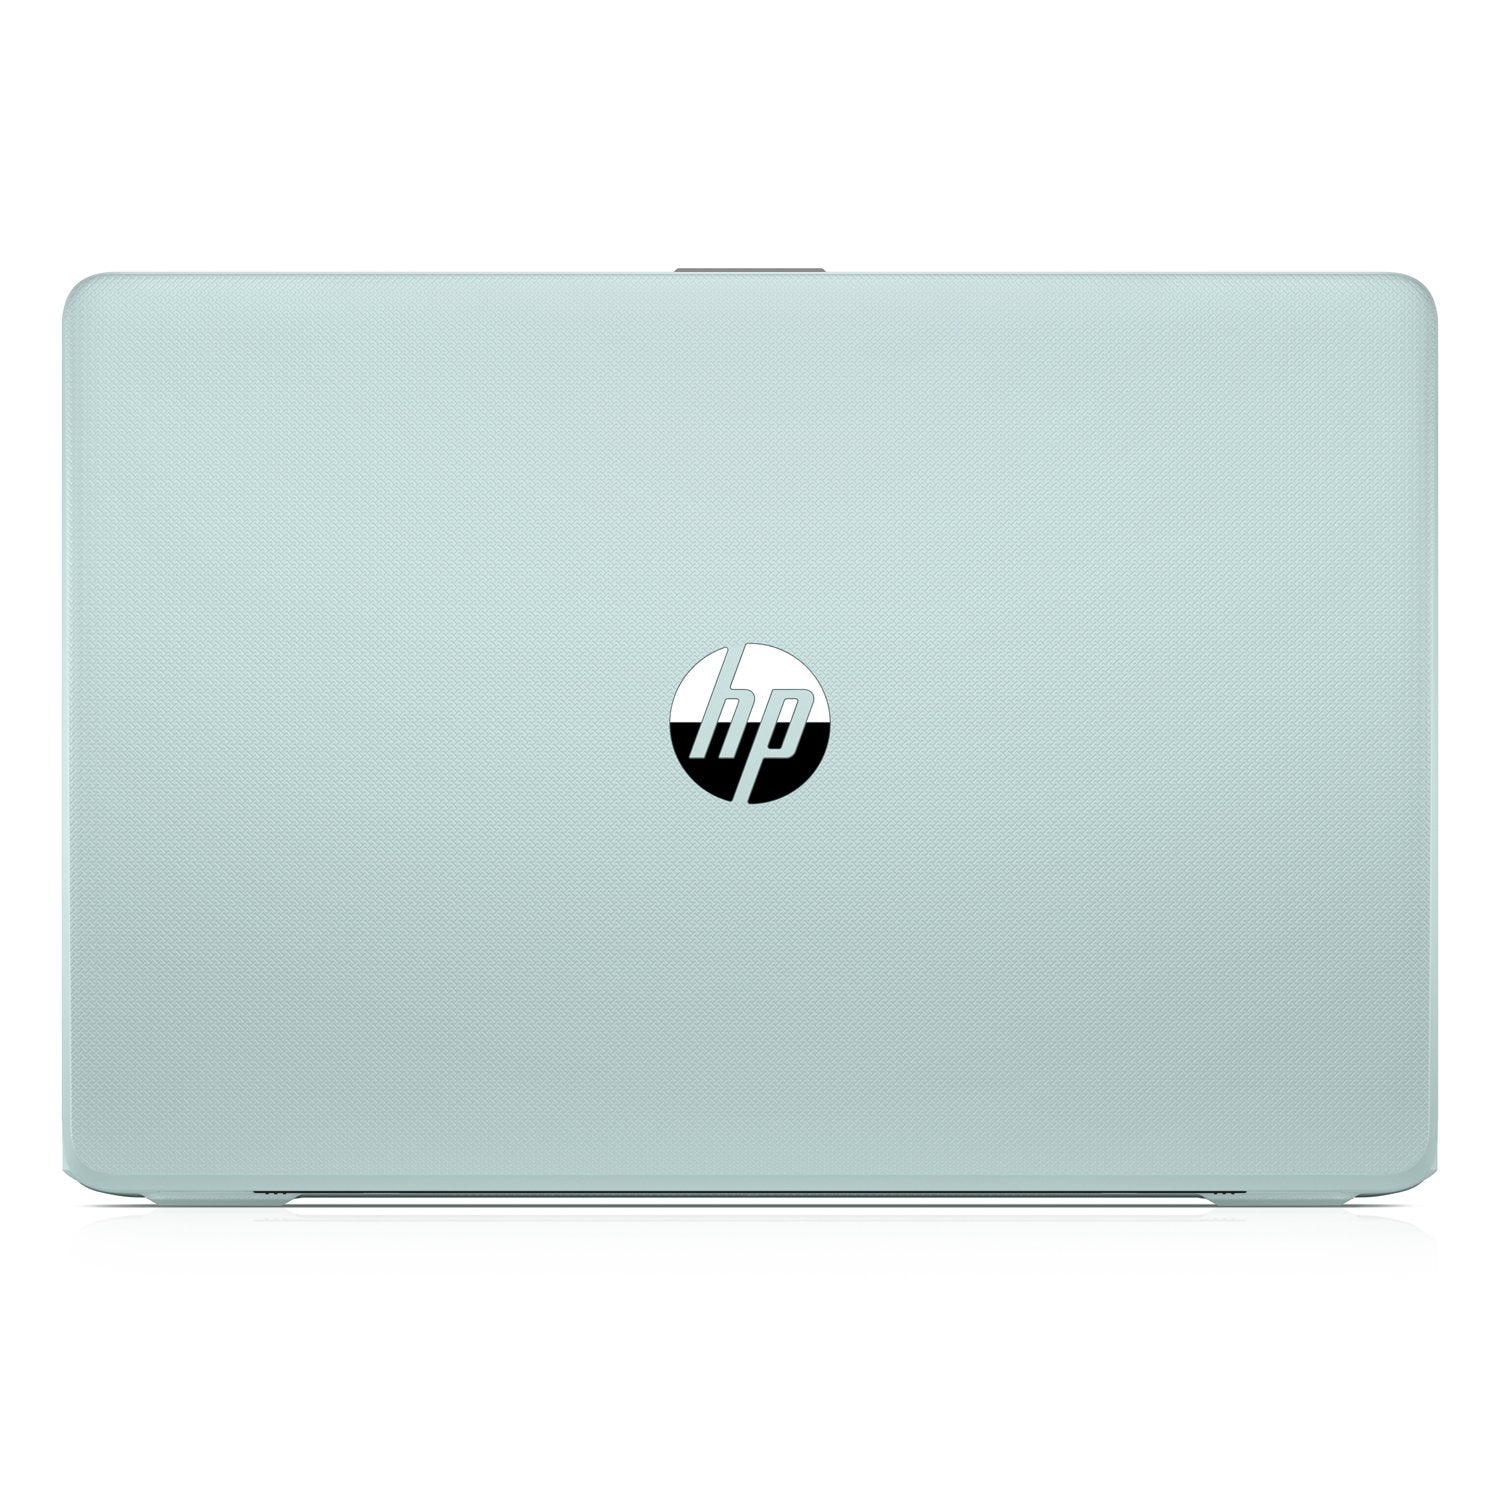 Hp 15 Bw004wm 15 6 Pale Mint Laptop Windows 10 Amd E2 9000e Process Circle Technology